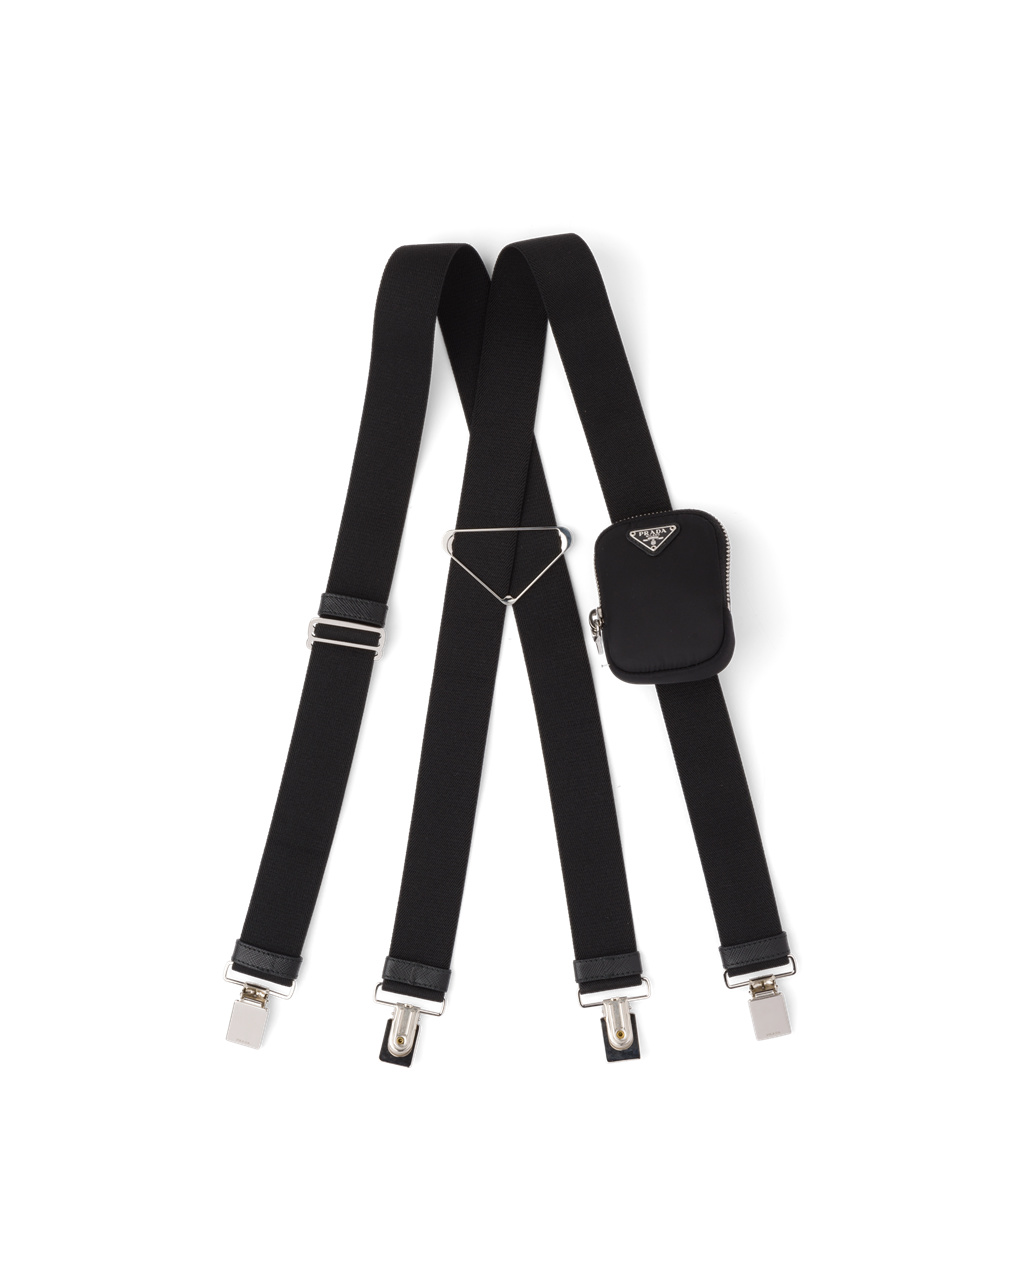 Brucle Elastic Black Suspenders for Men with Geometric Pattern